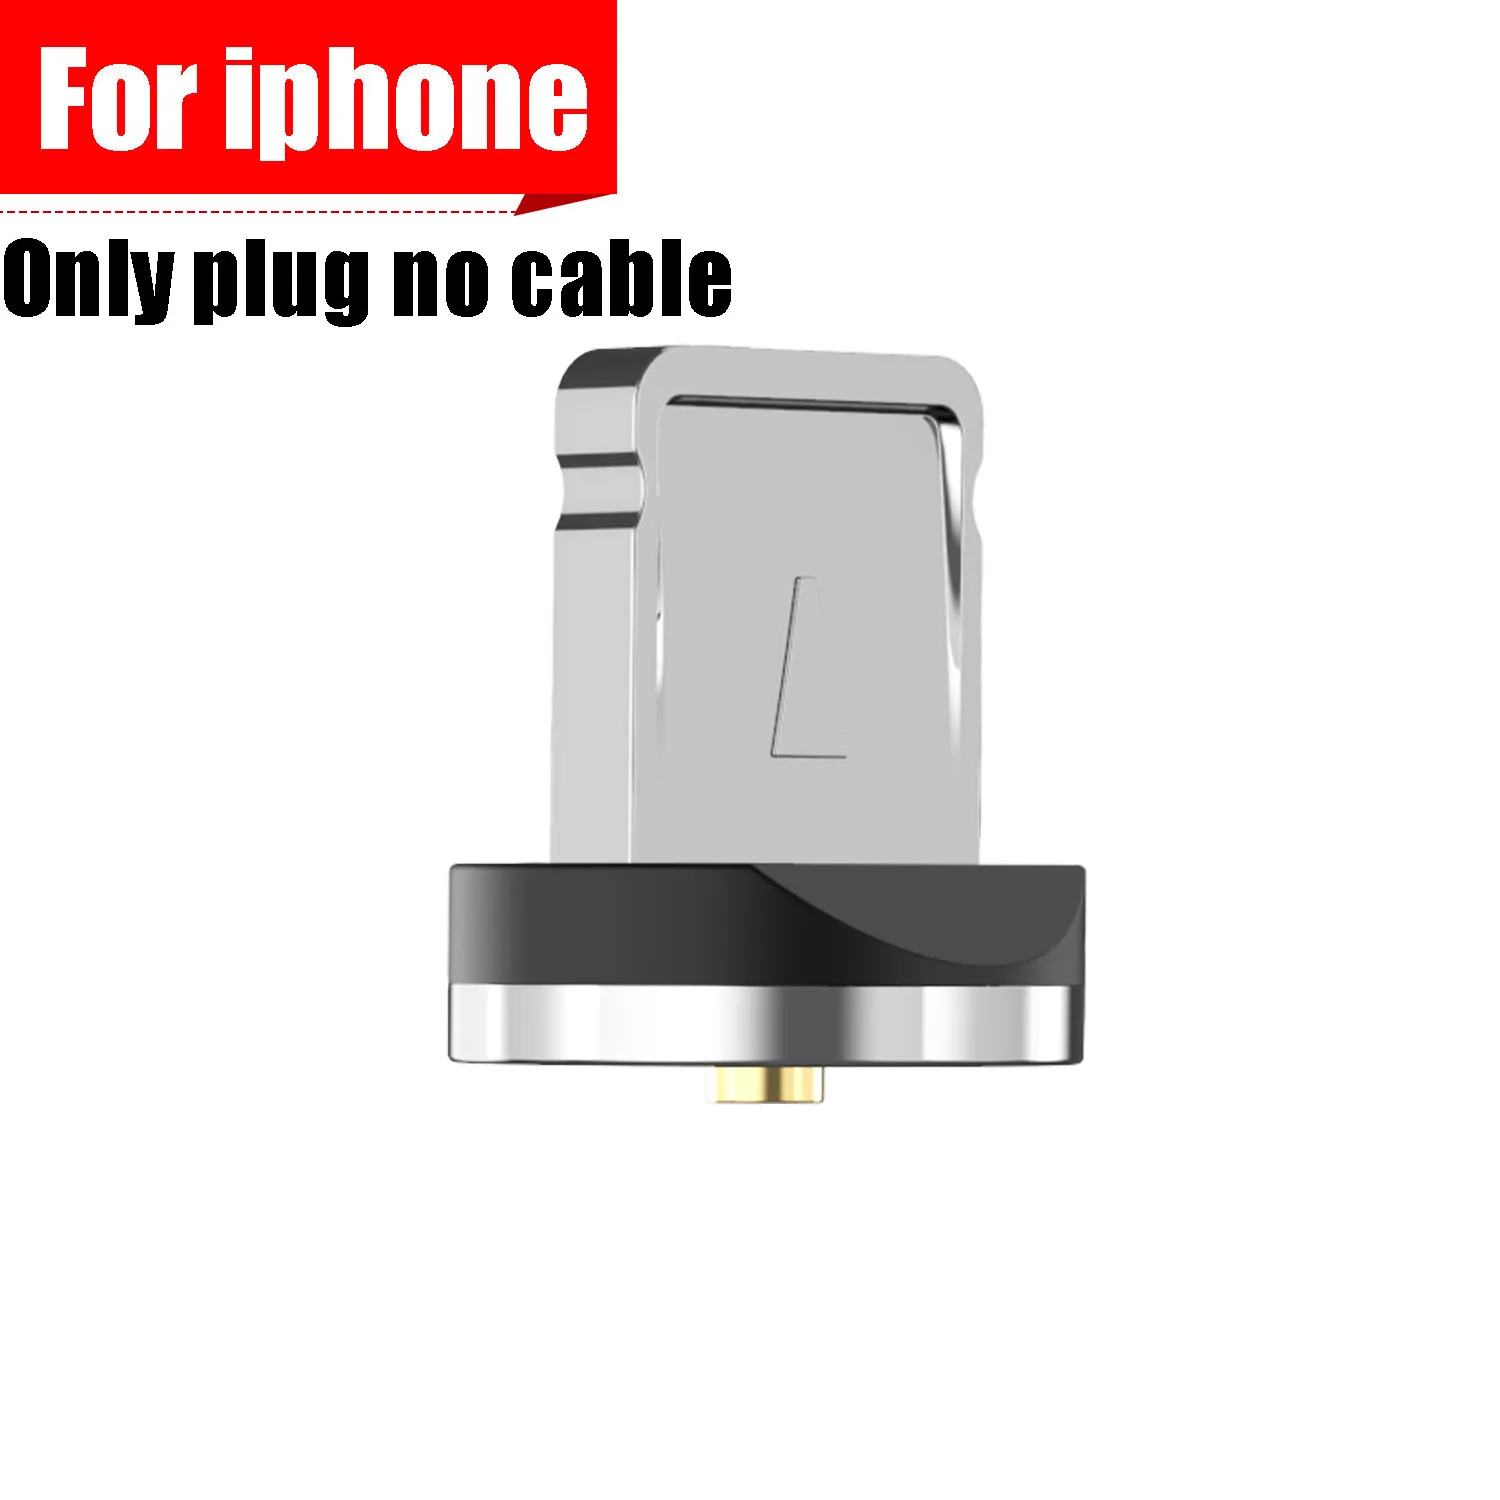 Lovebay 2 м Быстрый Магнитный кабель type C Micro usb зарядка для iPhone samsung Android мобильный телефон Магнитный кабель зарядное устройство кабель - Цвет: For Iphone only plug